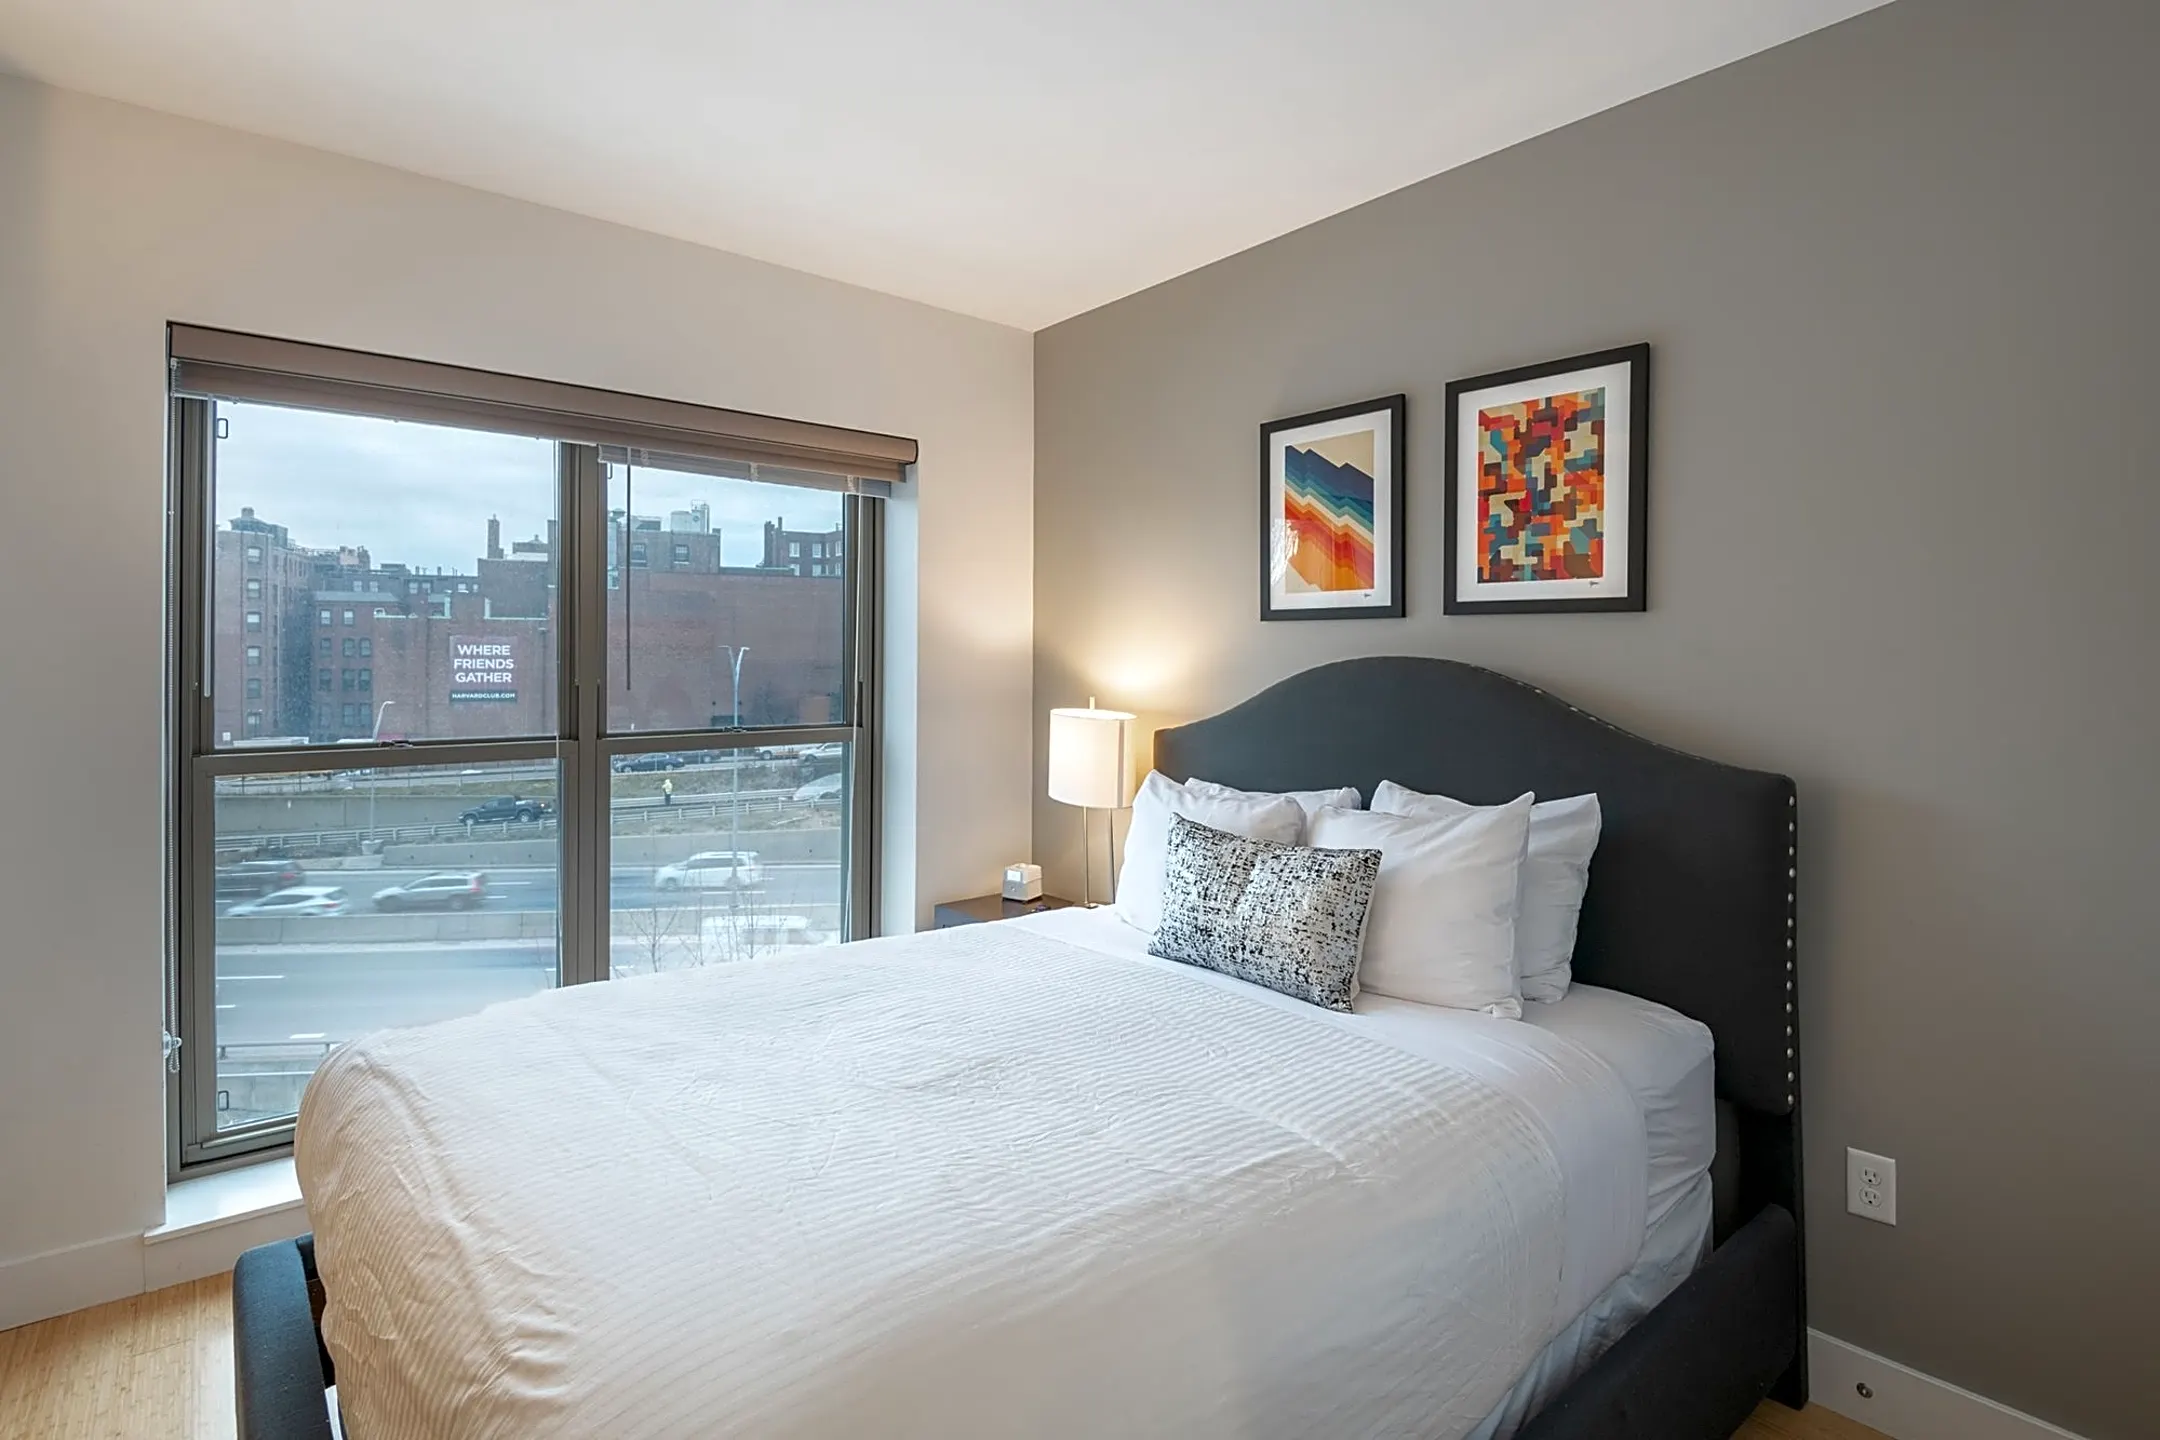 Bedroom - 1085 Boylston Street - Boston, MA